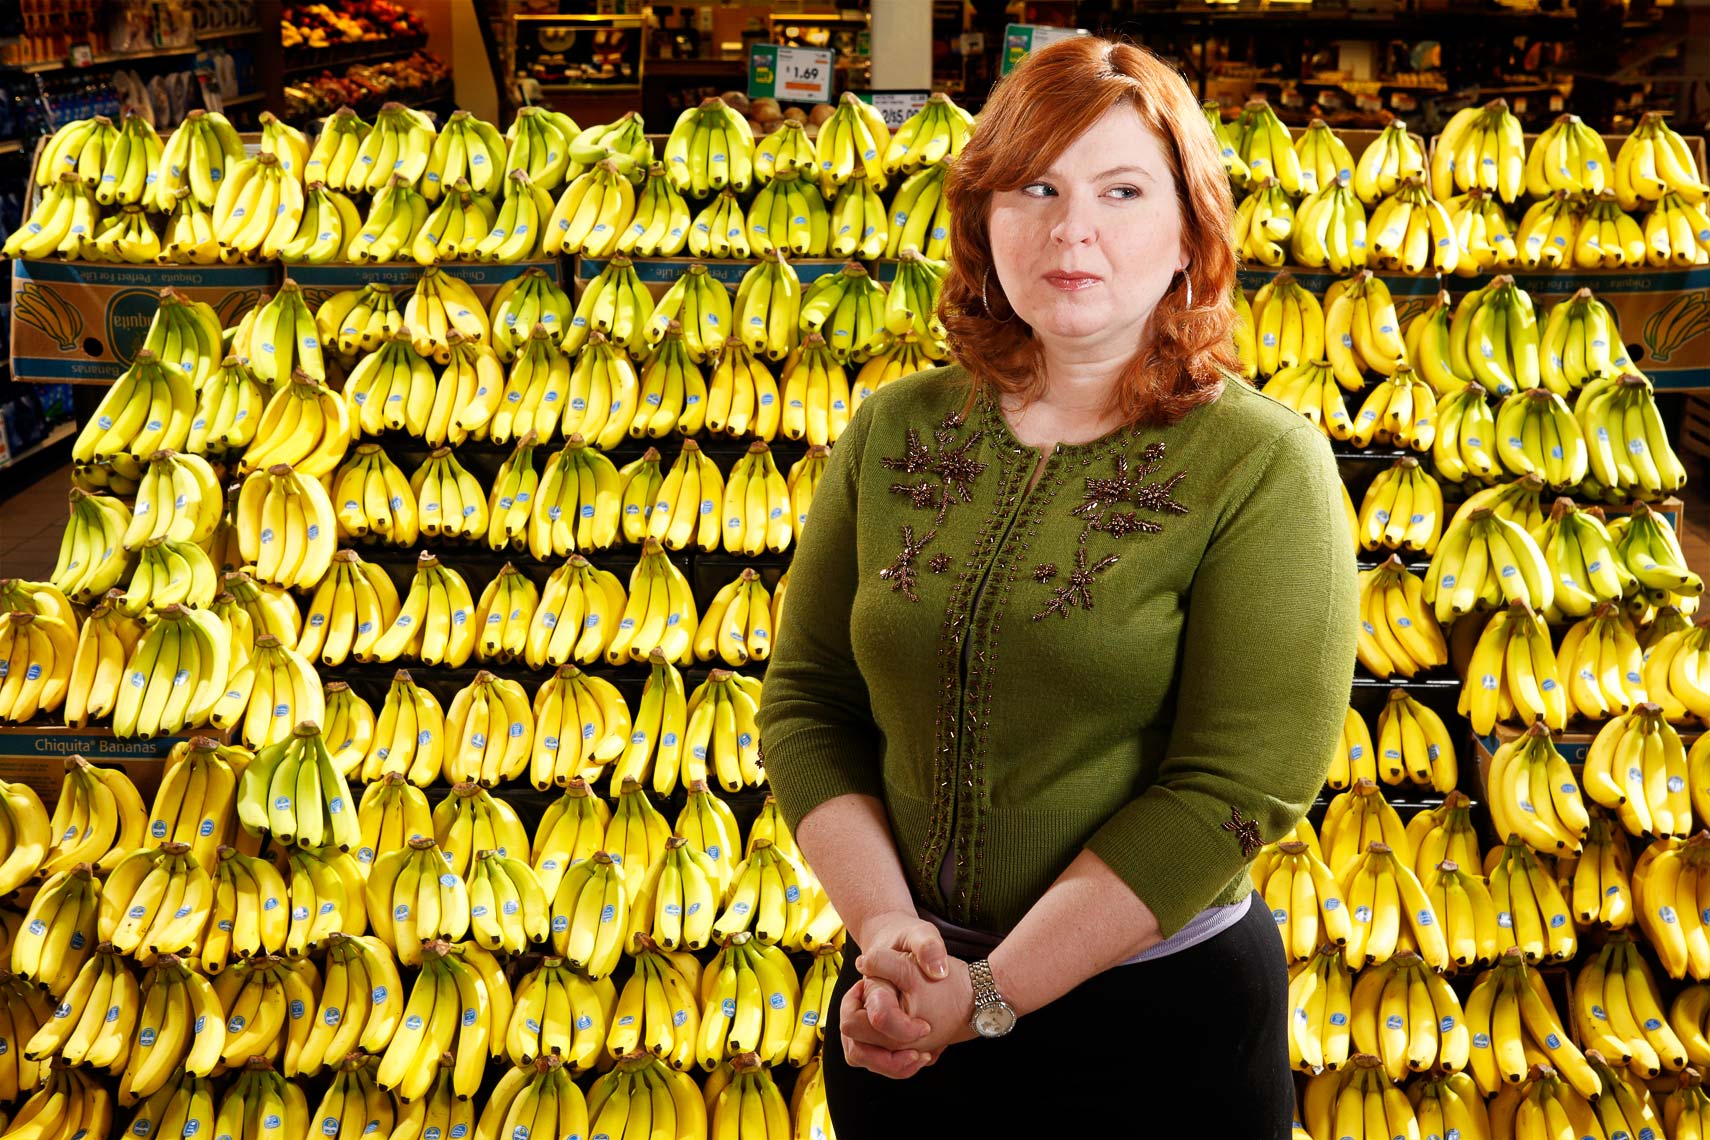 Bananaphobia / Fear of Bananas